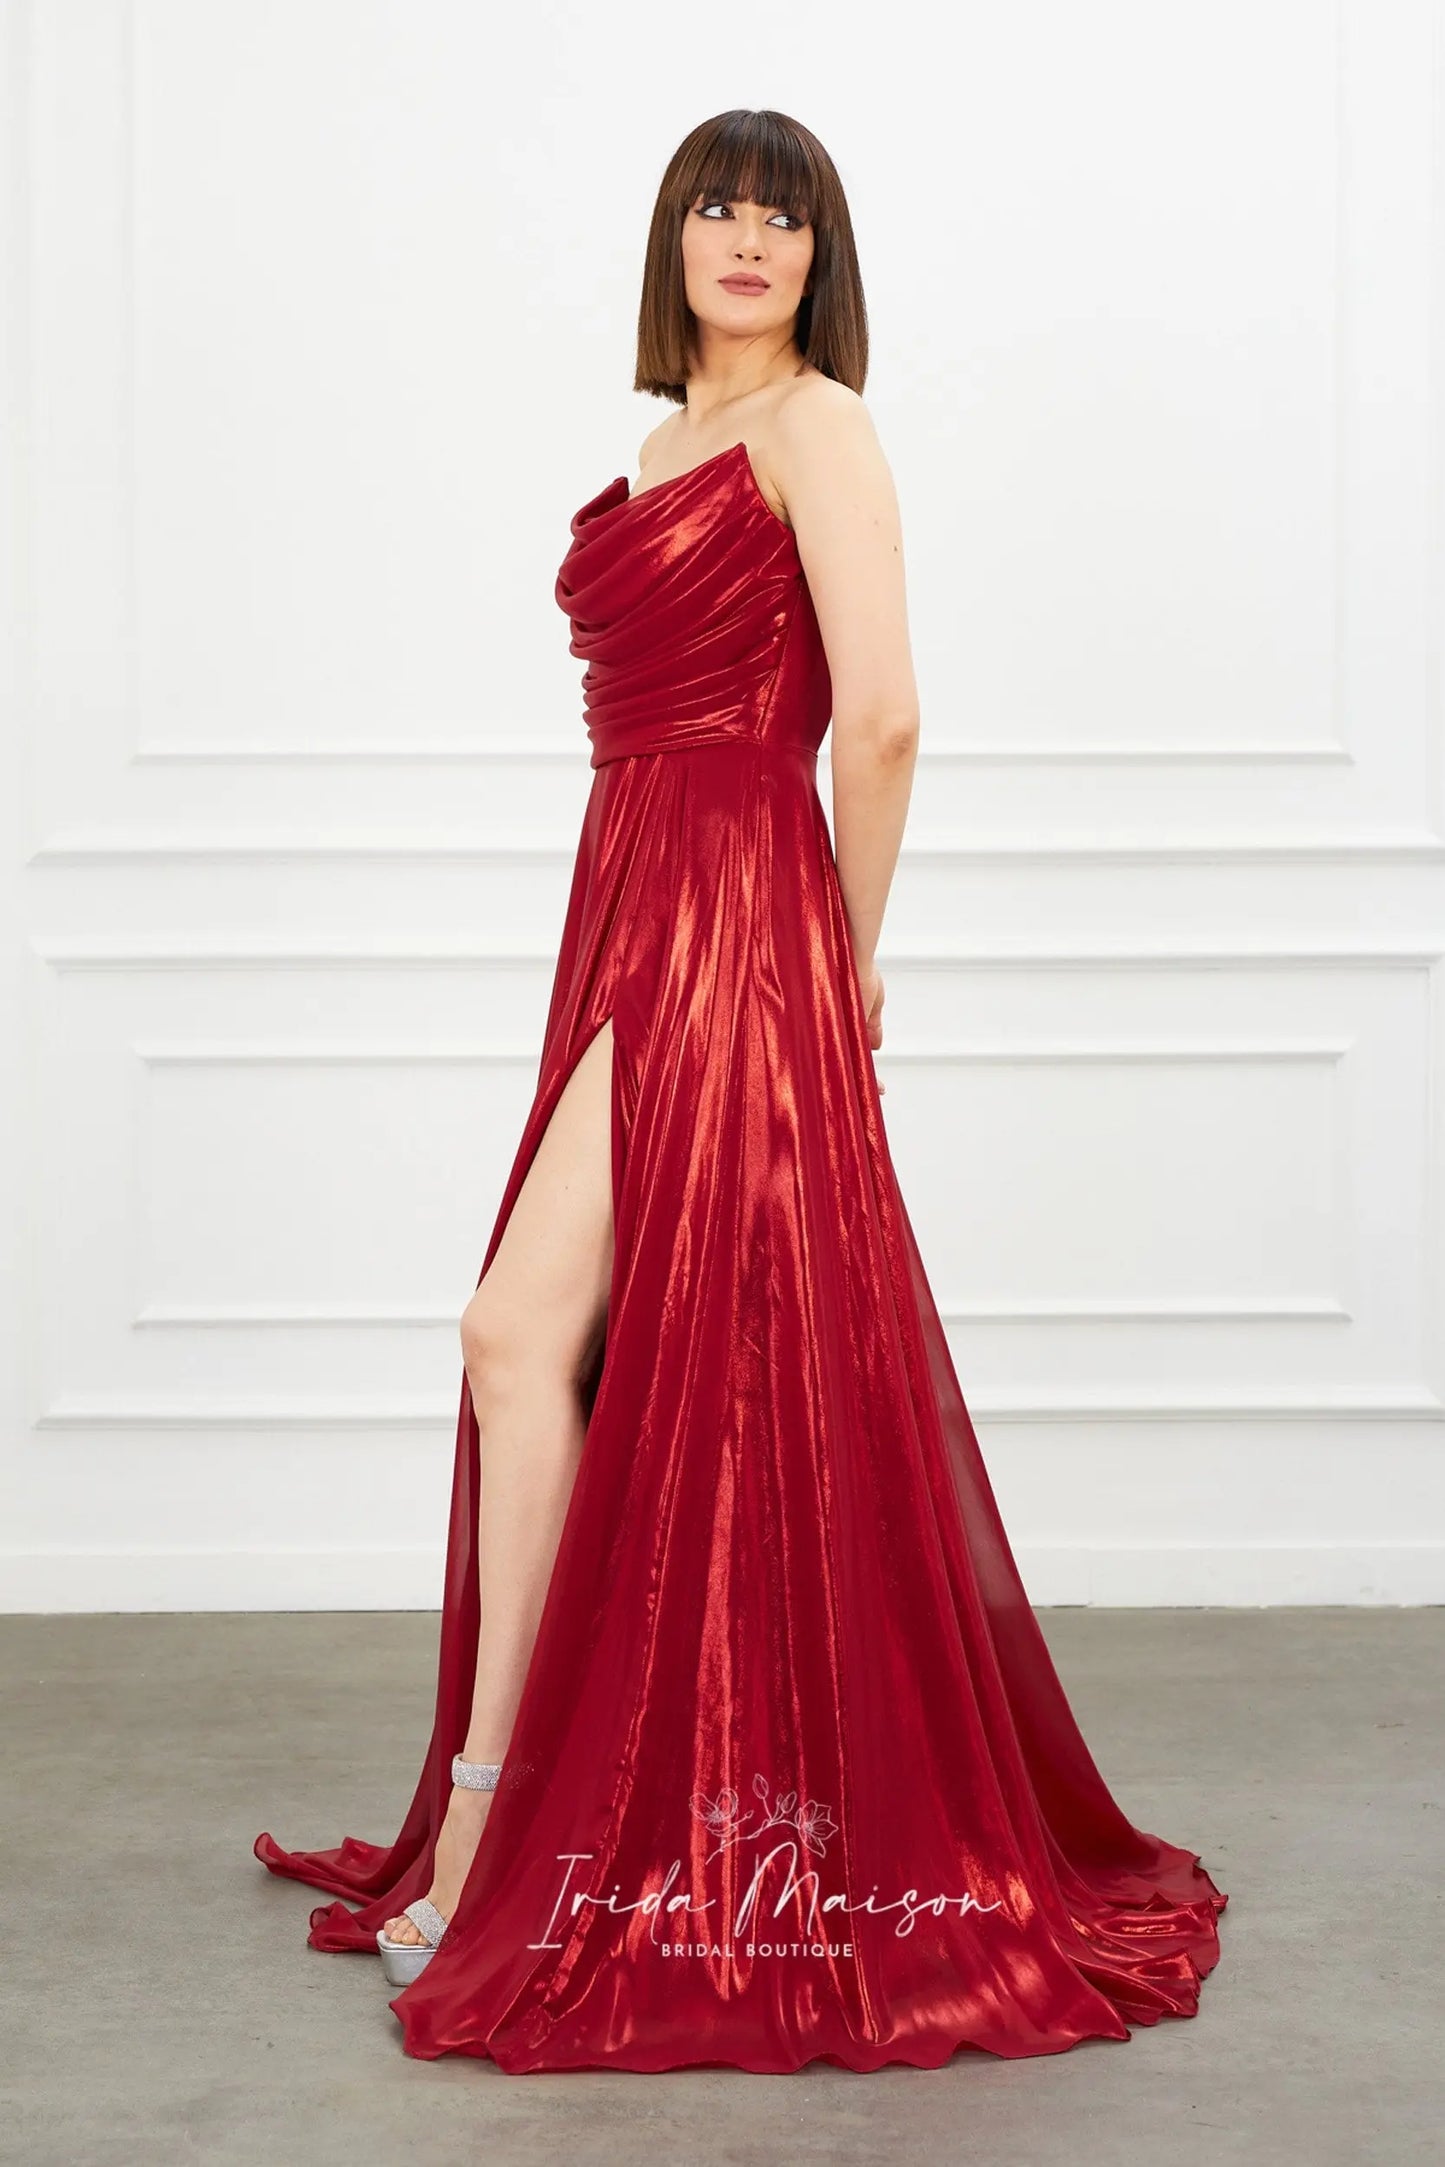 Unique Light fabric metallic long Prom dress, Cocktail Dress, long Dress, Red Carpet Dress, Party Dress, Special Occasion Dress, Event Dress